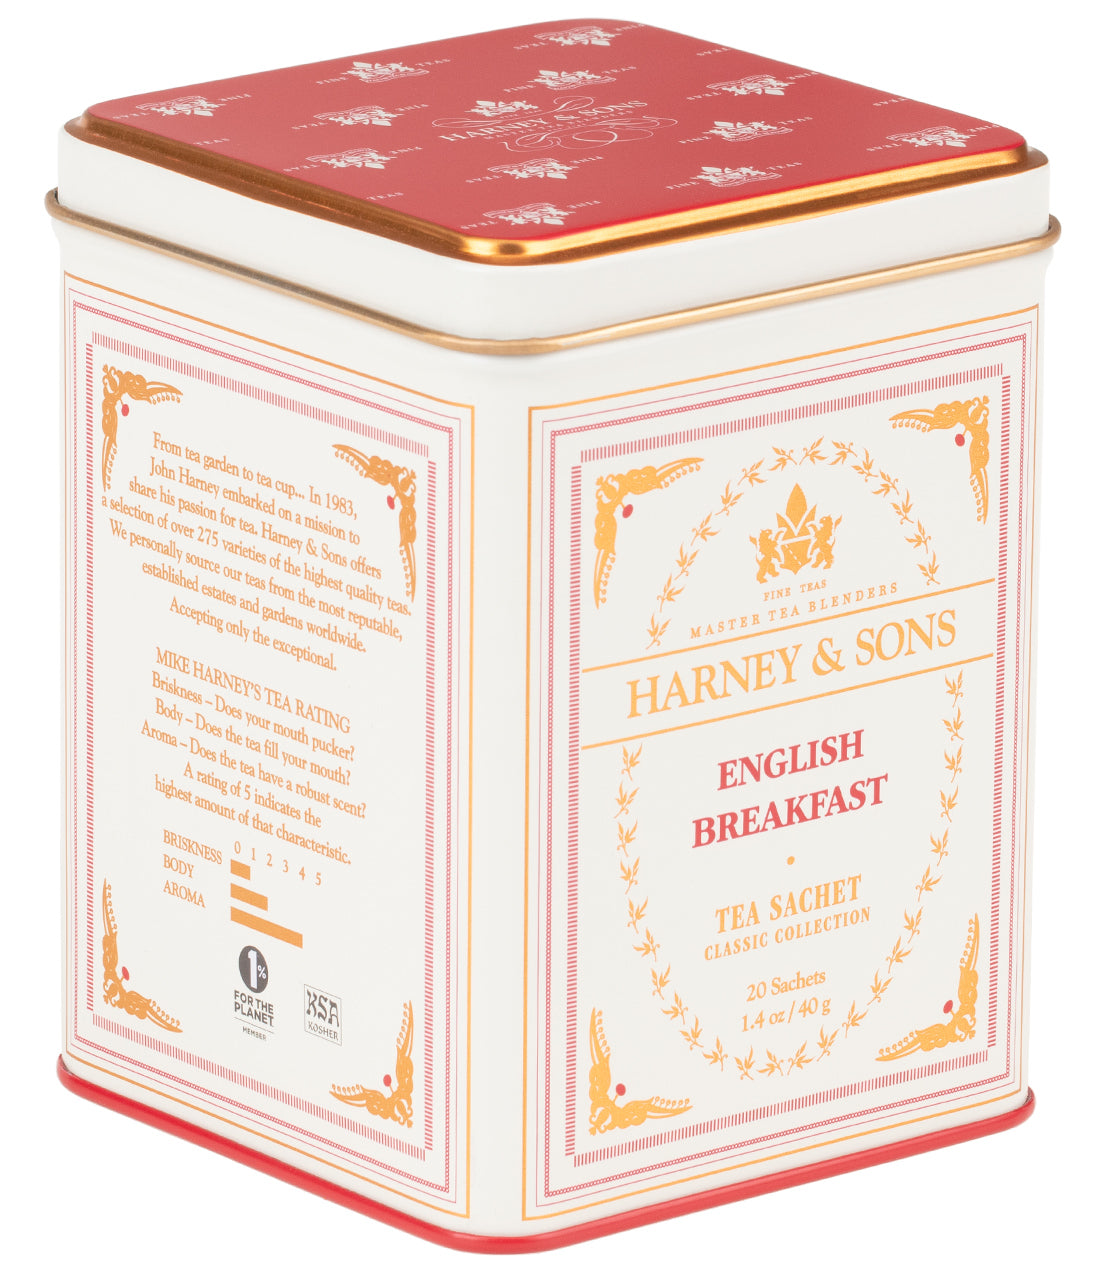 English Breakfast, Classic Tin of 20 Sachets - Sachets Single Classic Tin of 20 Sachets - Harney & Sons Fine Teas